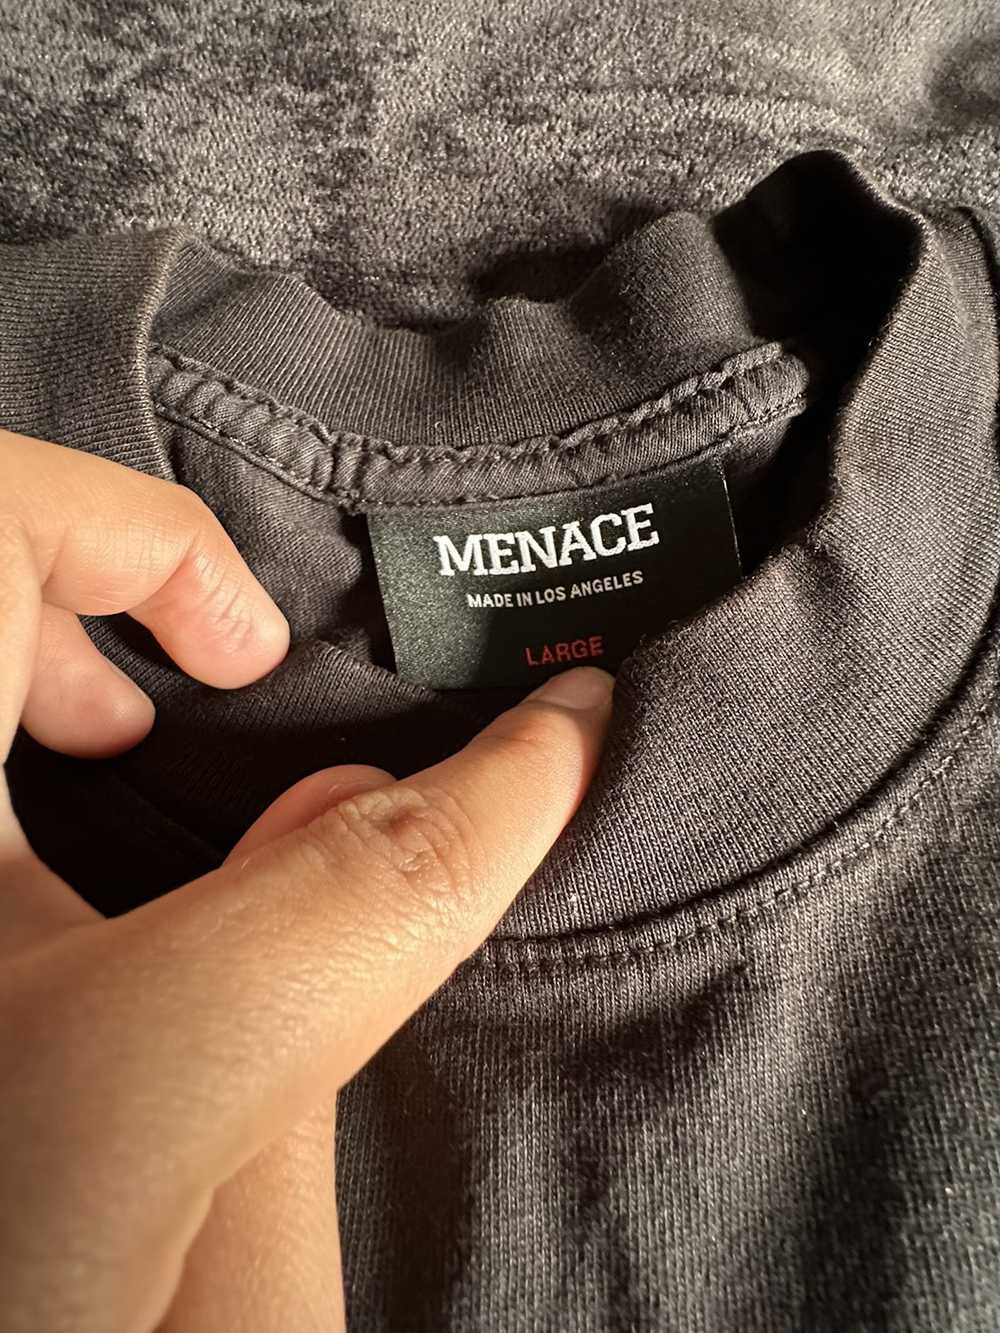 Menace Menace not a fan tee - image 3